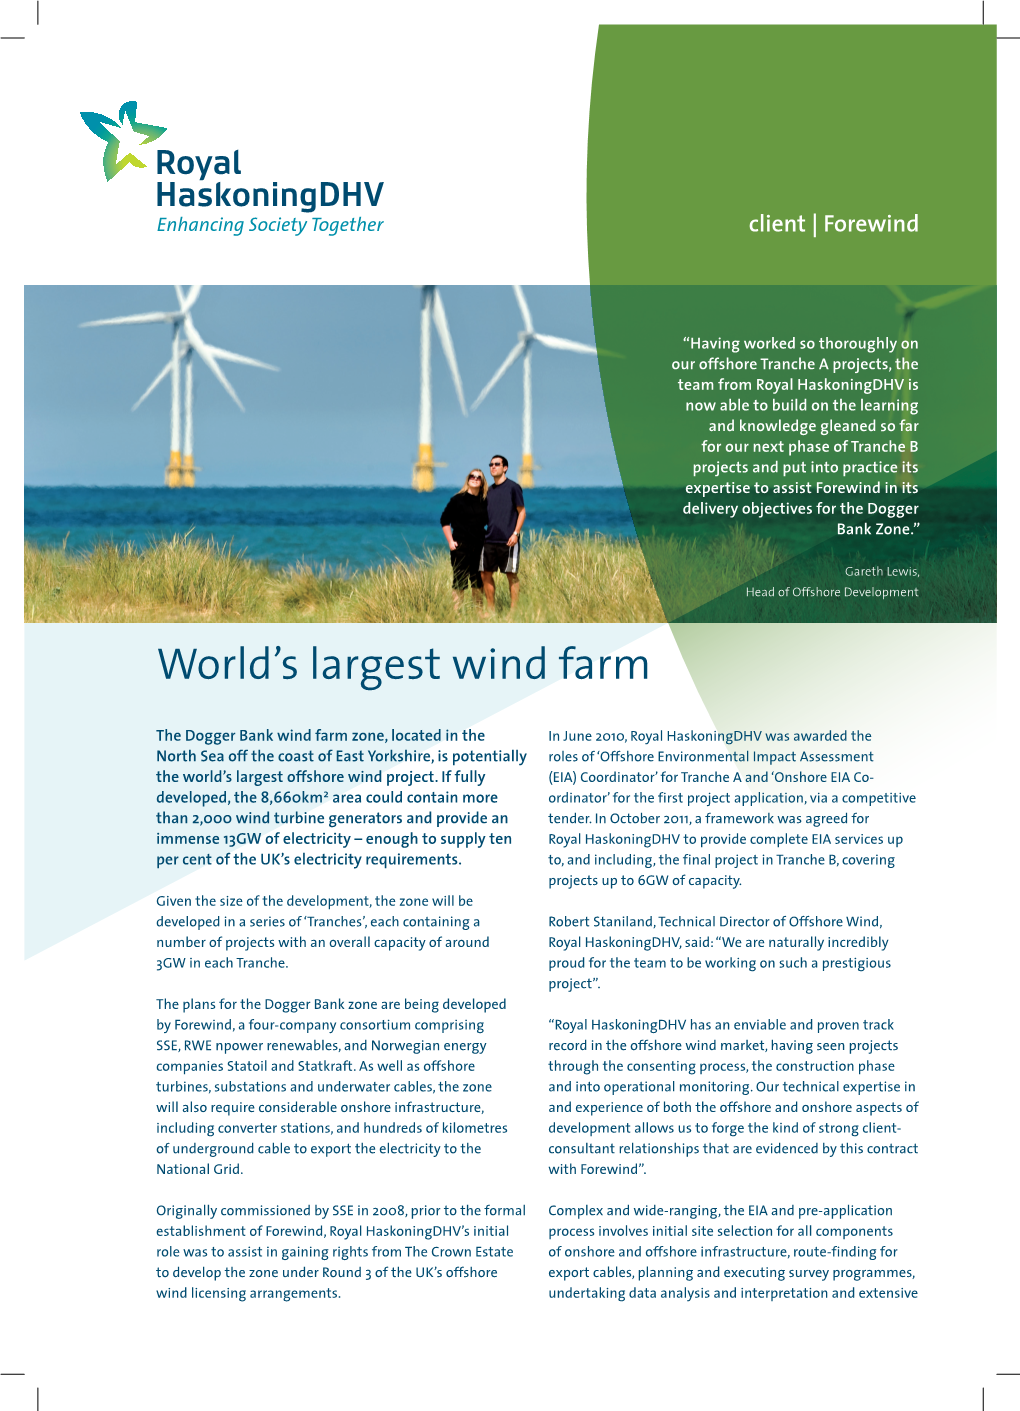 World's Largest Wind Farm